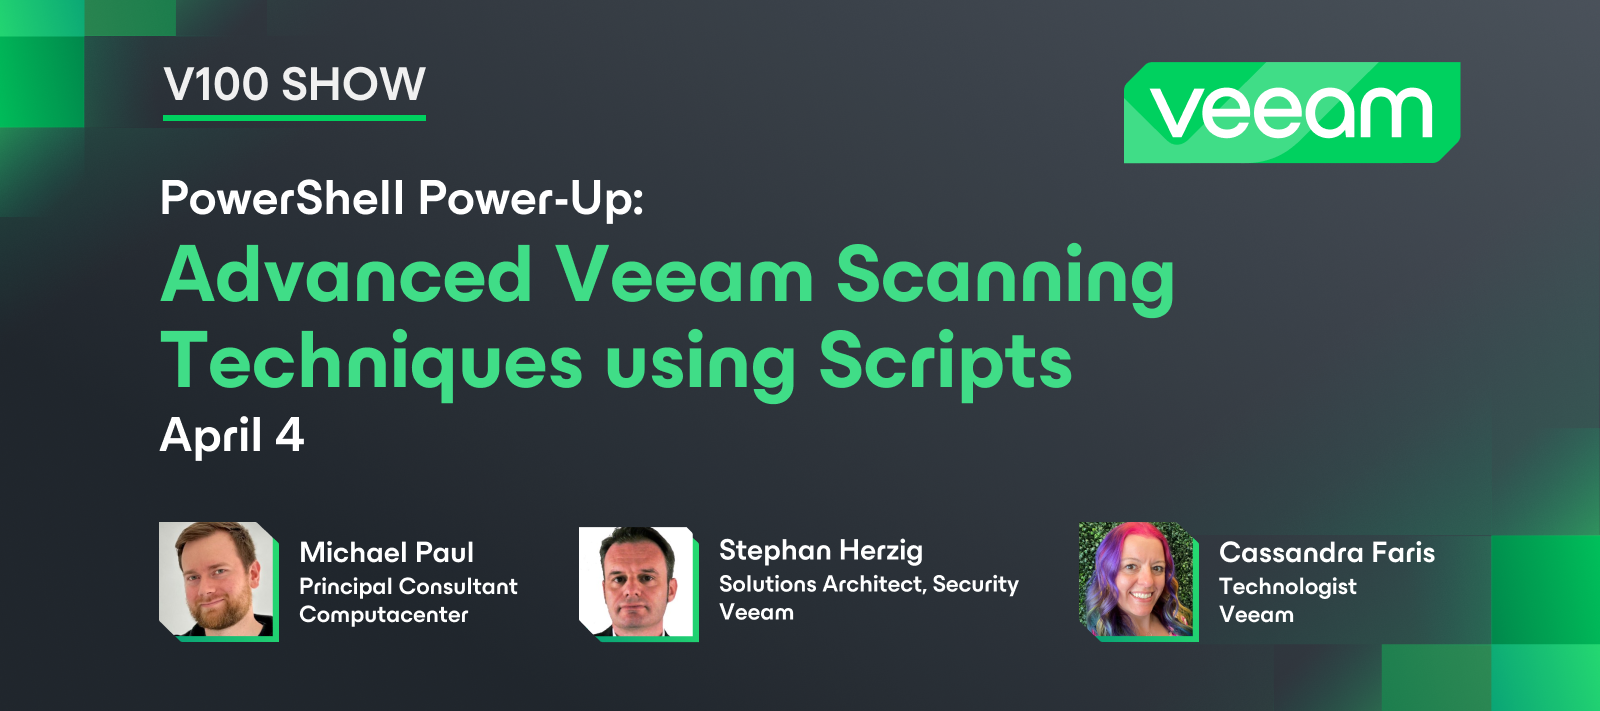 Veeam 100 Show - PowerShell Power-Up: Advanced Veeam Scanning Techniques using Scripts